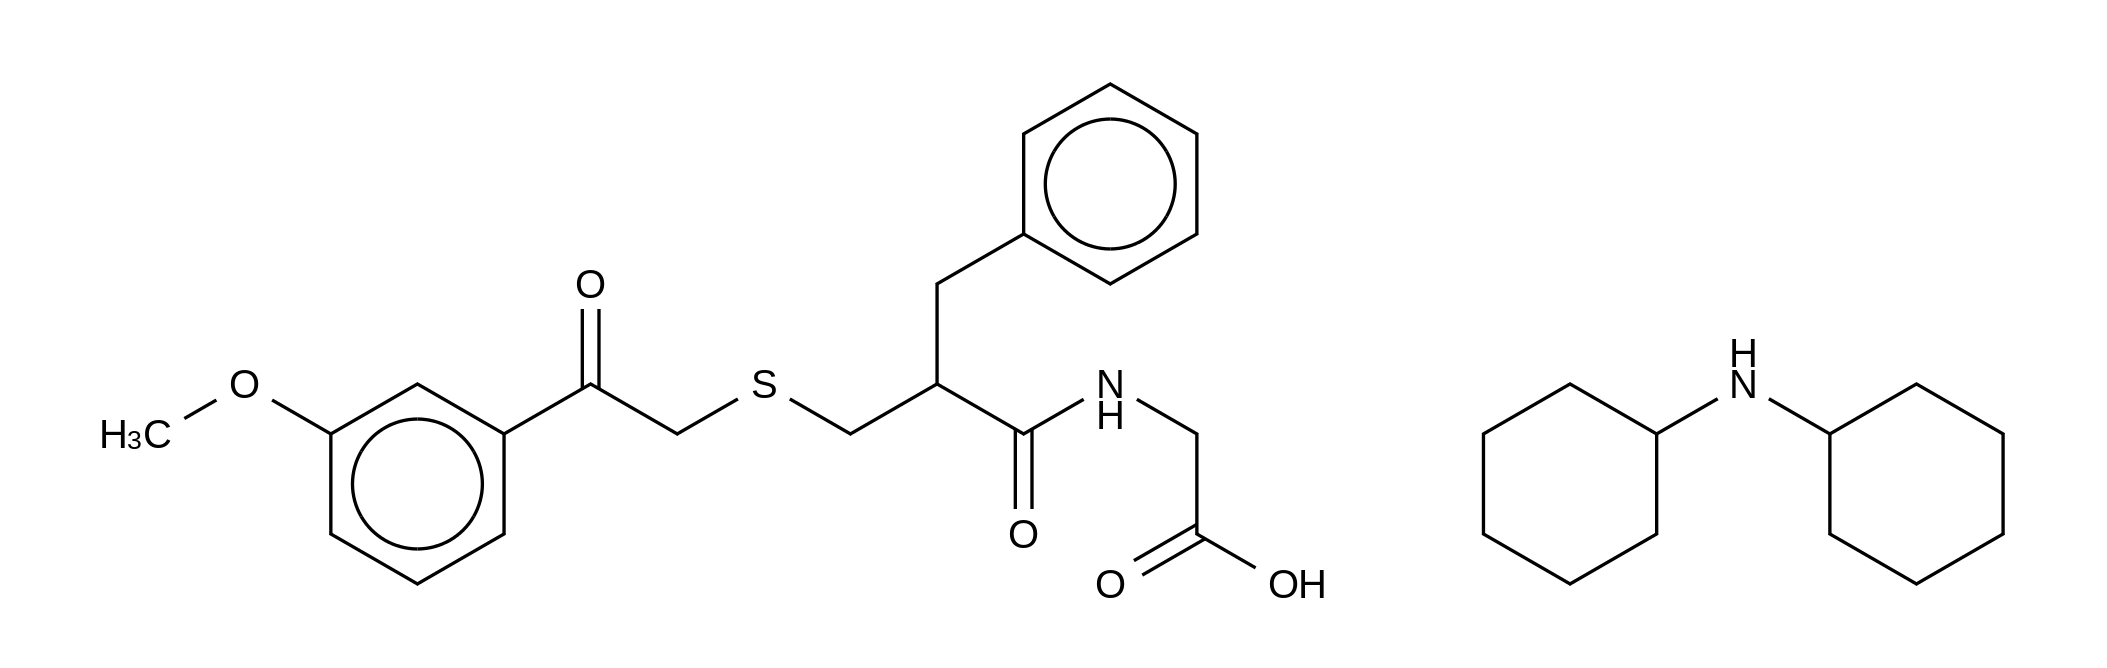 Thiorphan Methoxyacetophenone Derivative Dicyclohexylamine Salt (85%)